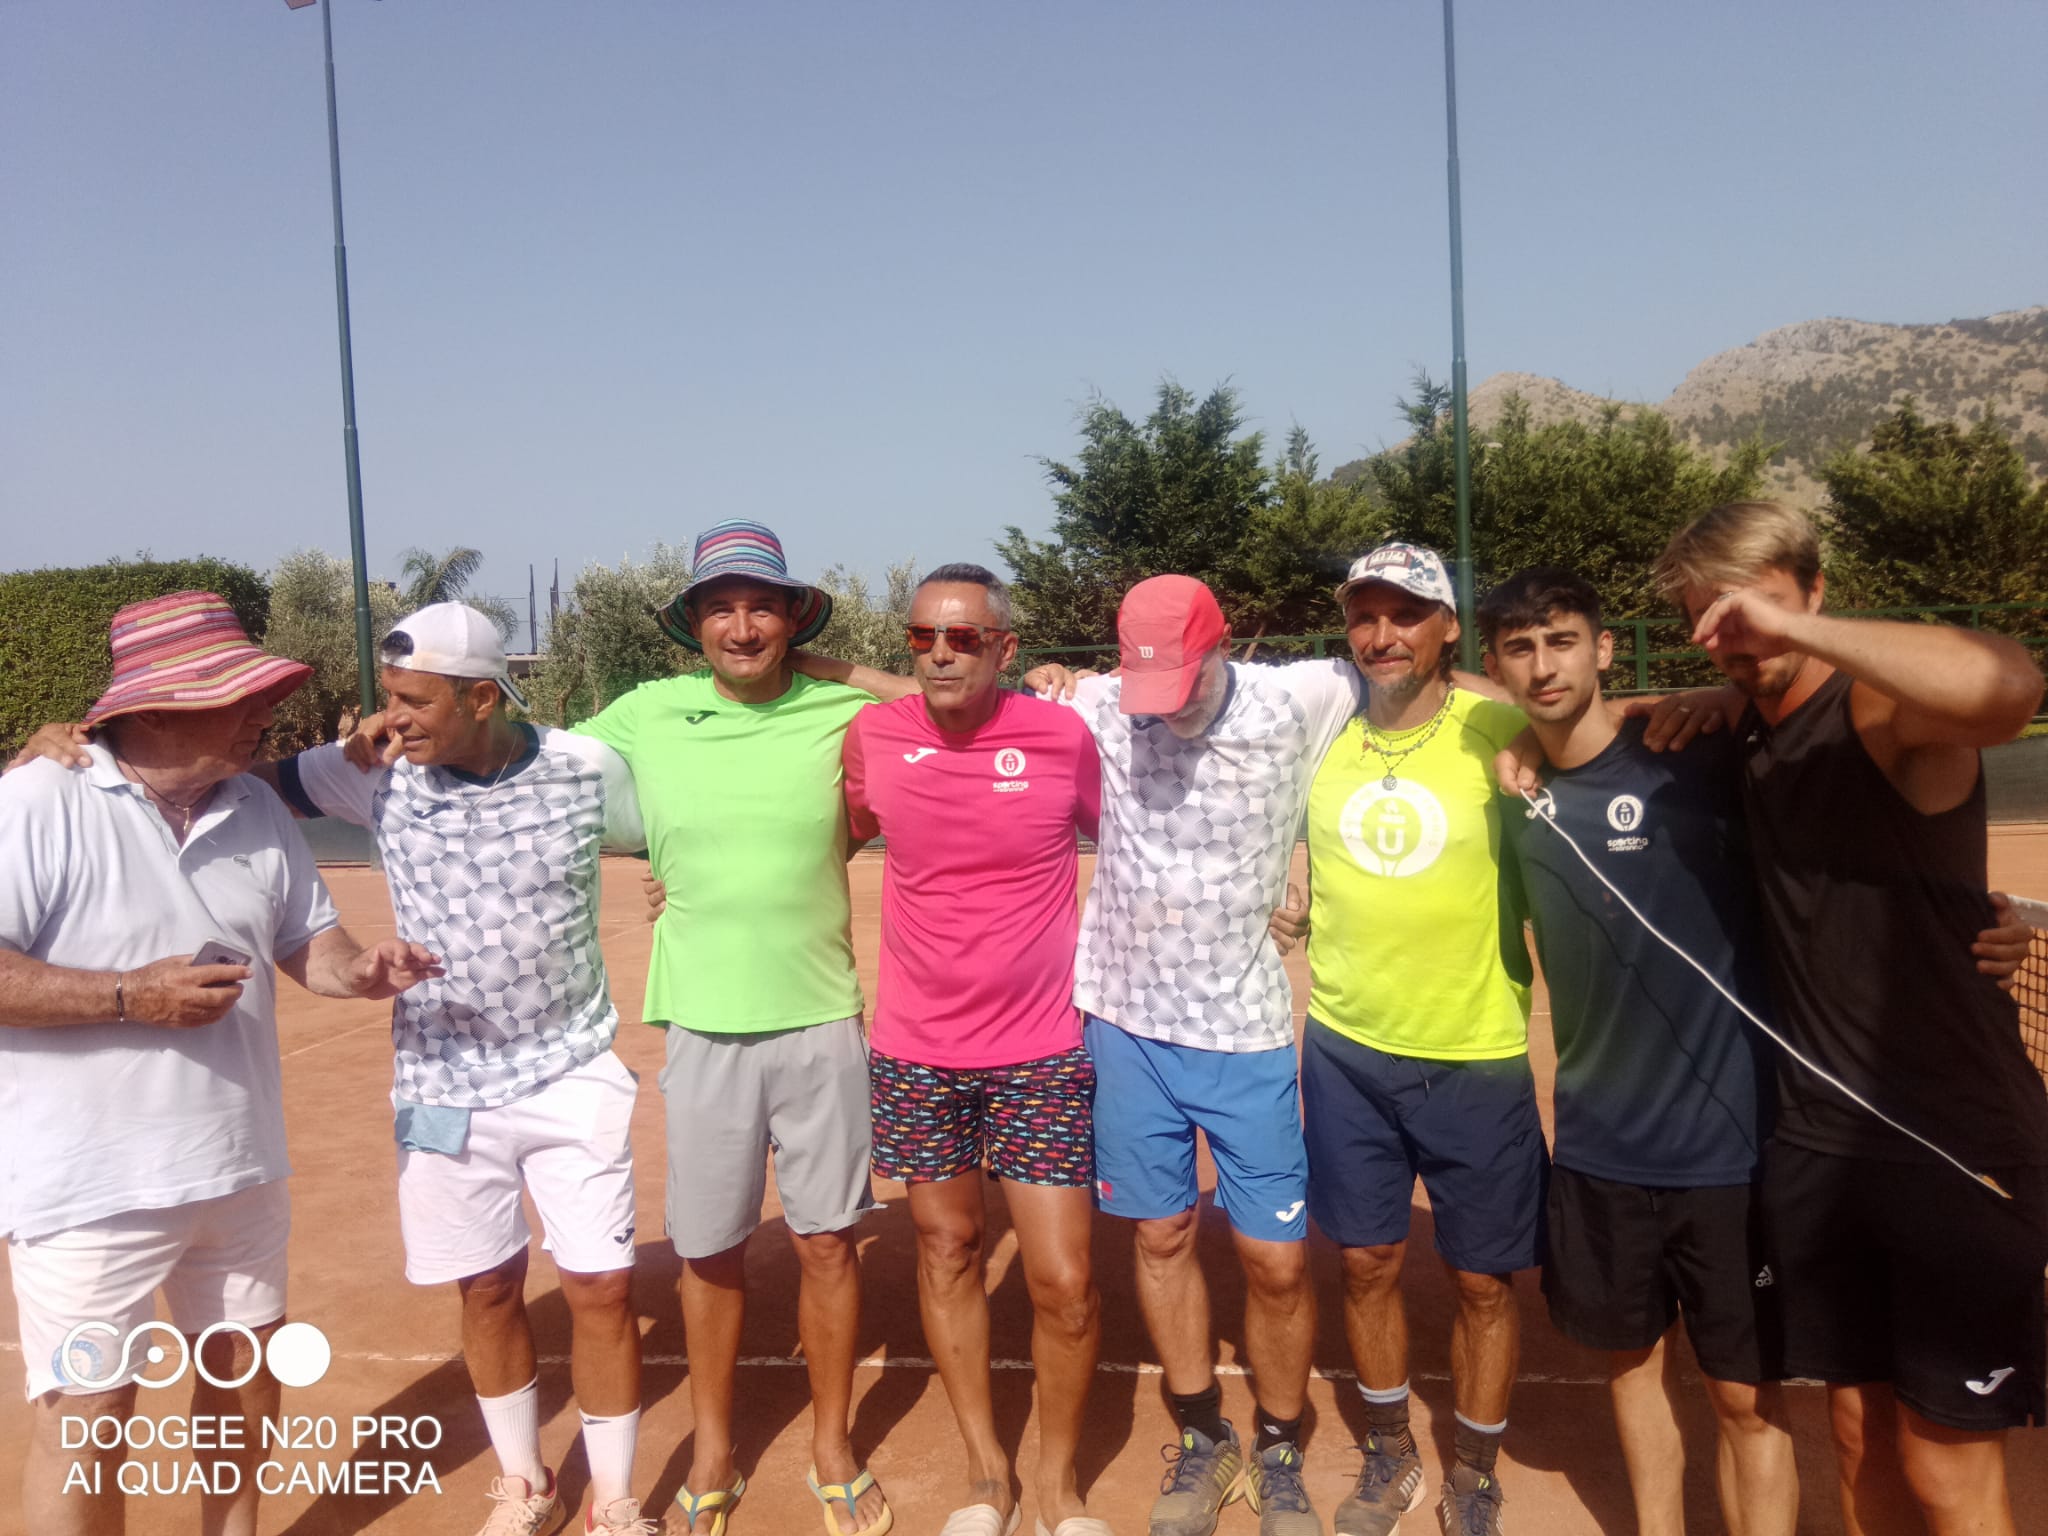 Tennis, Sporting club Saronno campioni d’Italia in finals four